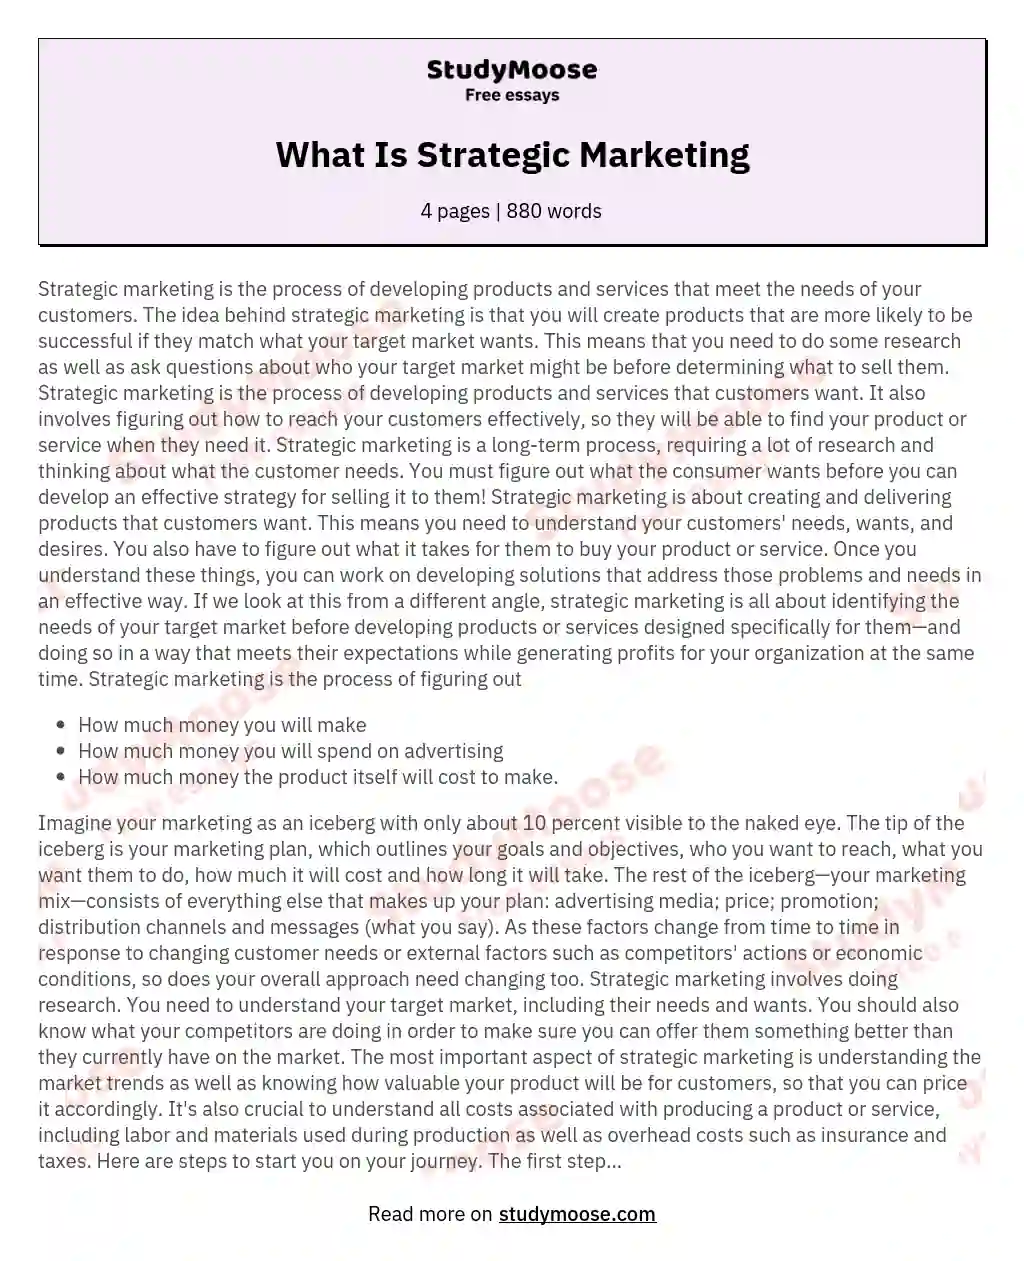 What Is Strategic Marketing essay